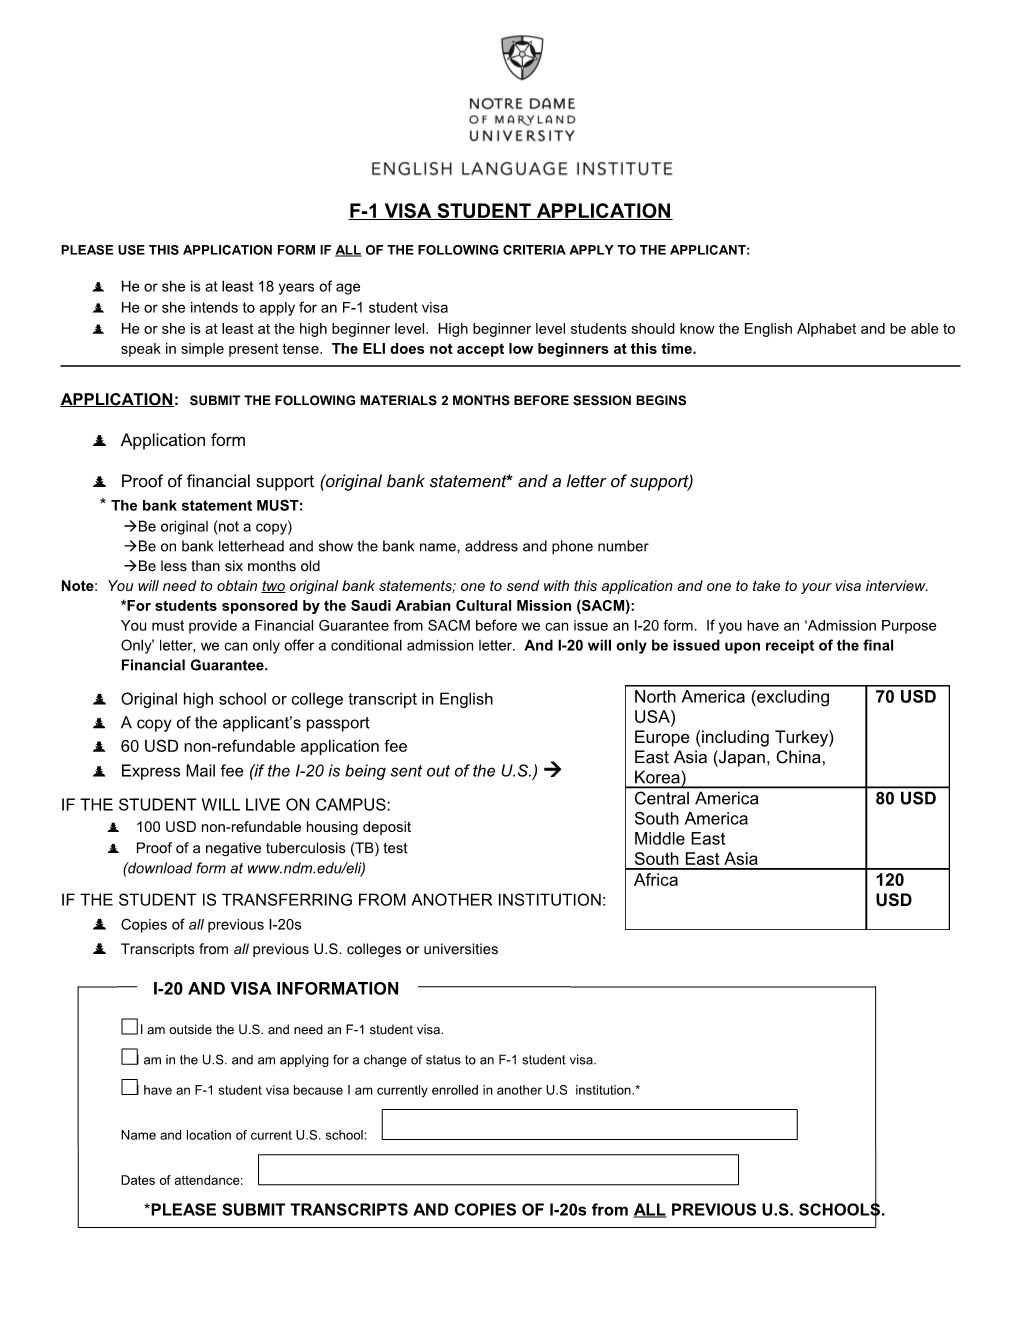 F-1 Visa Student Application